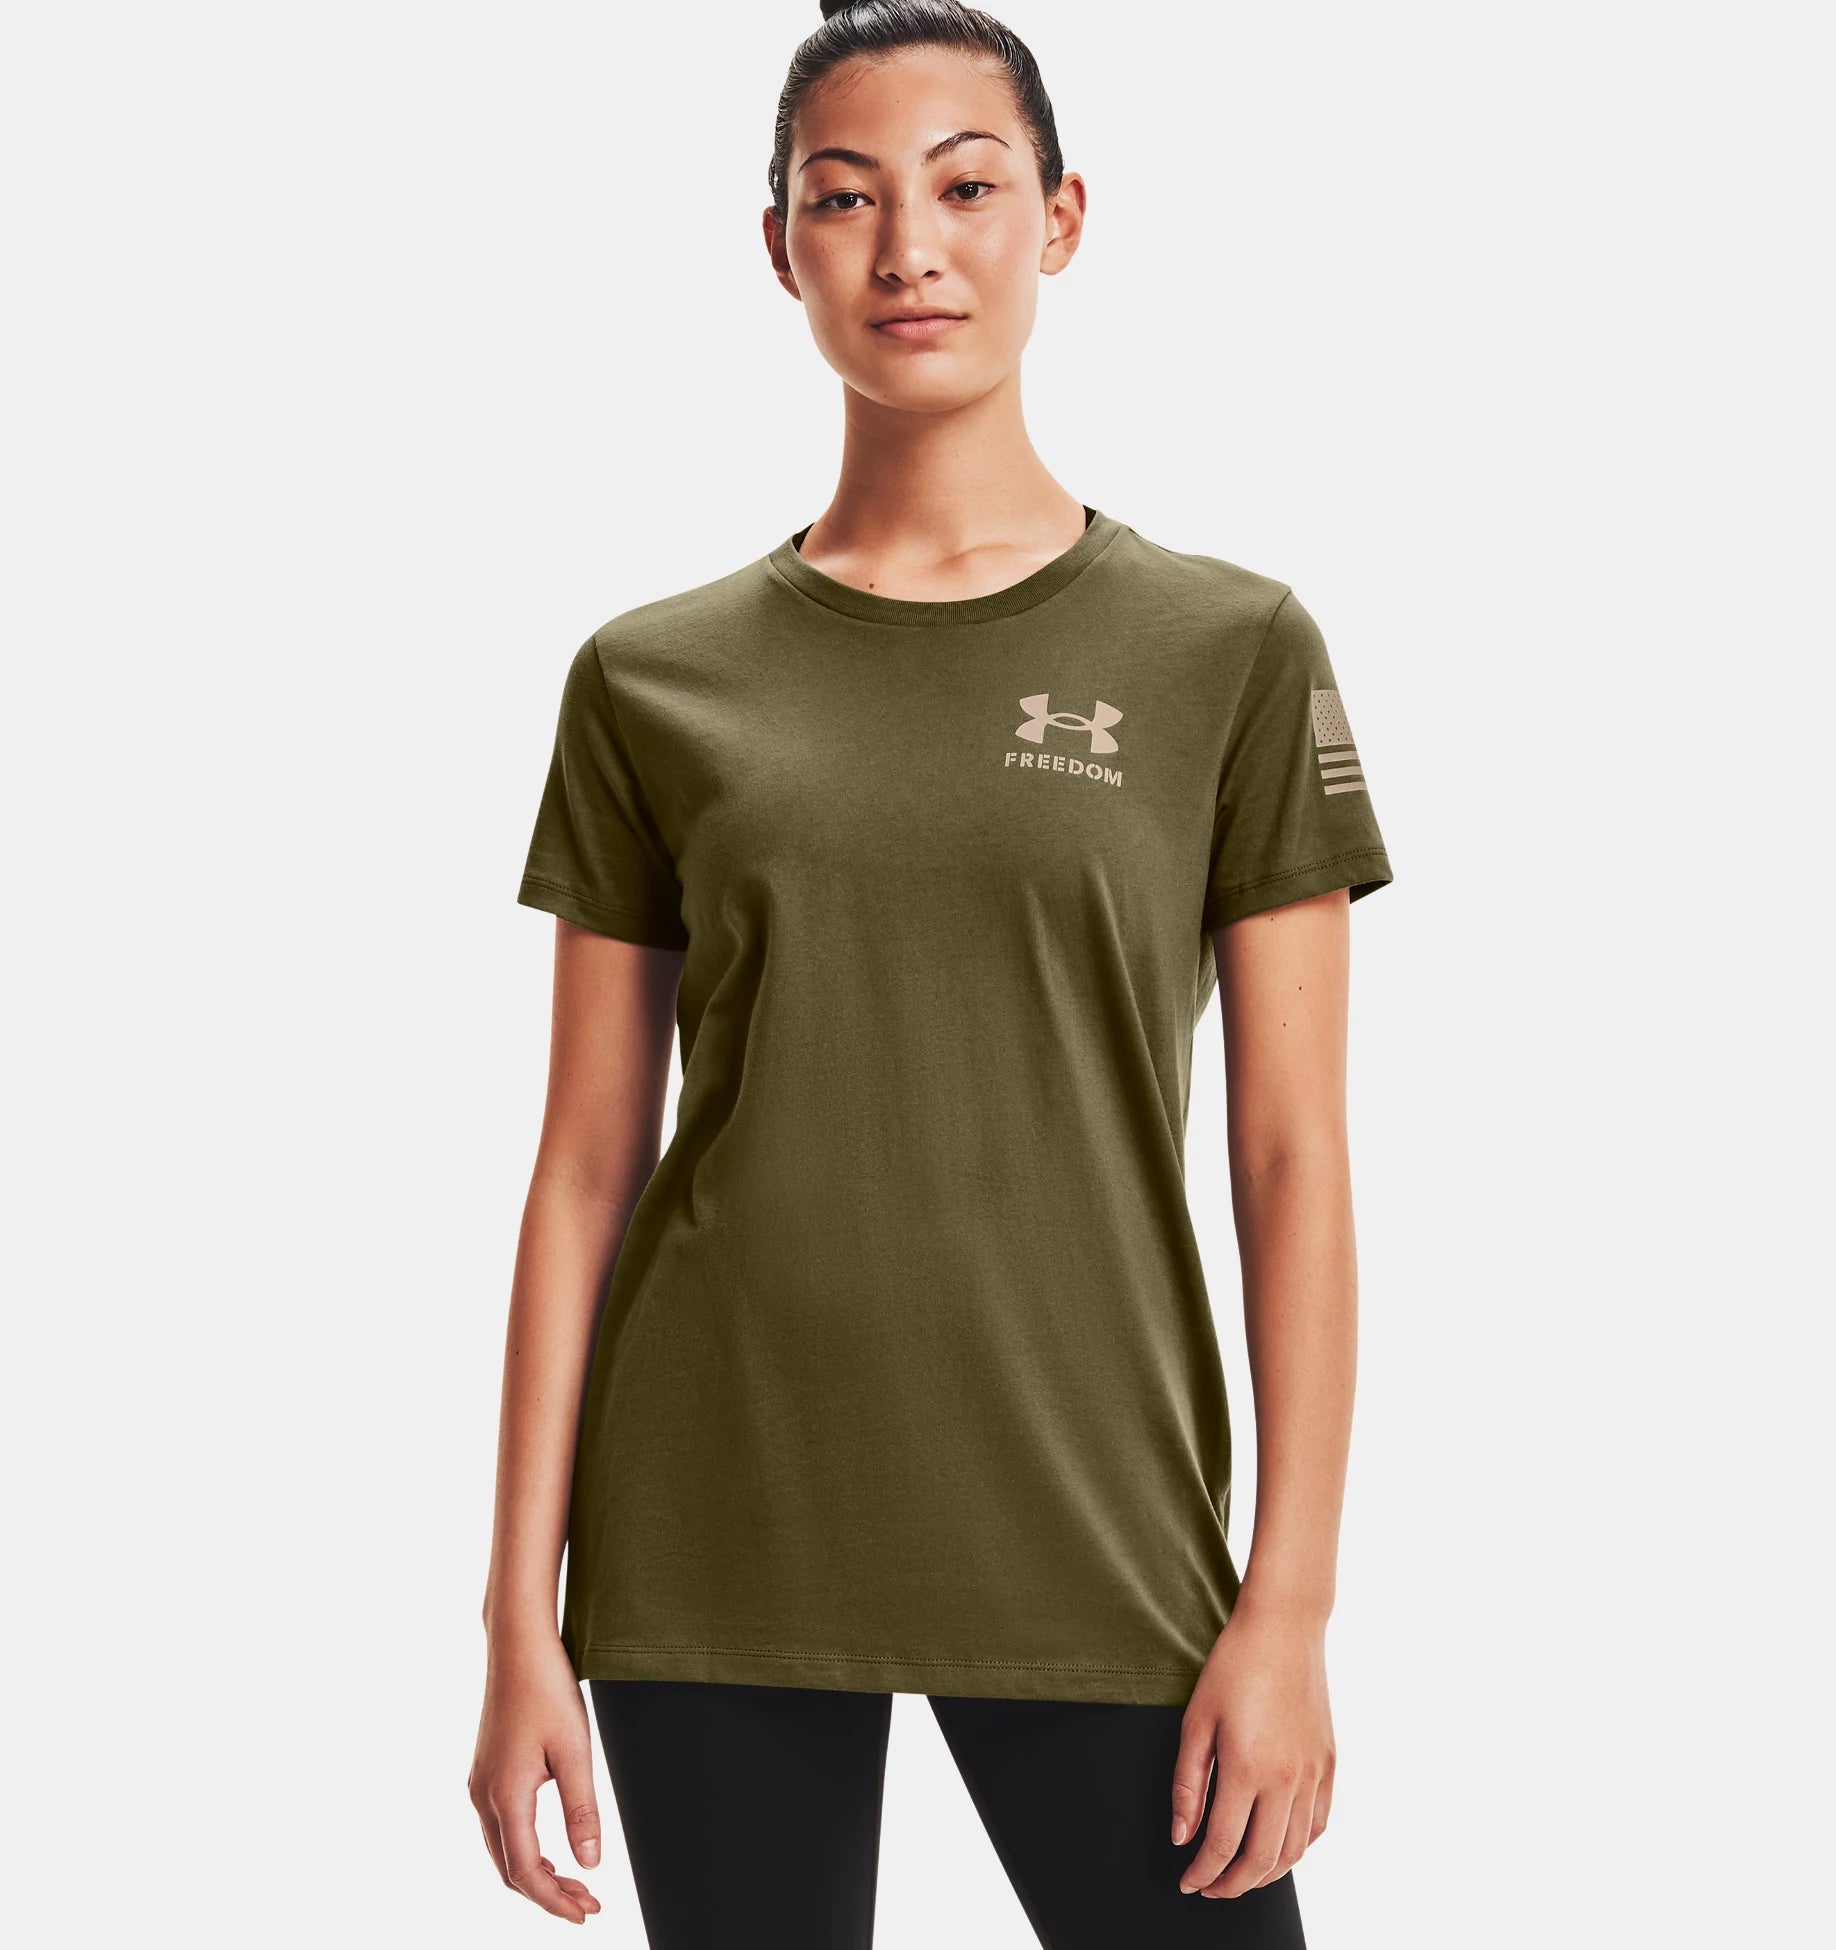 Under Armour Women's UA Freedom Flag T-Shirt 1370814 - T-Shirts